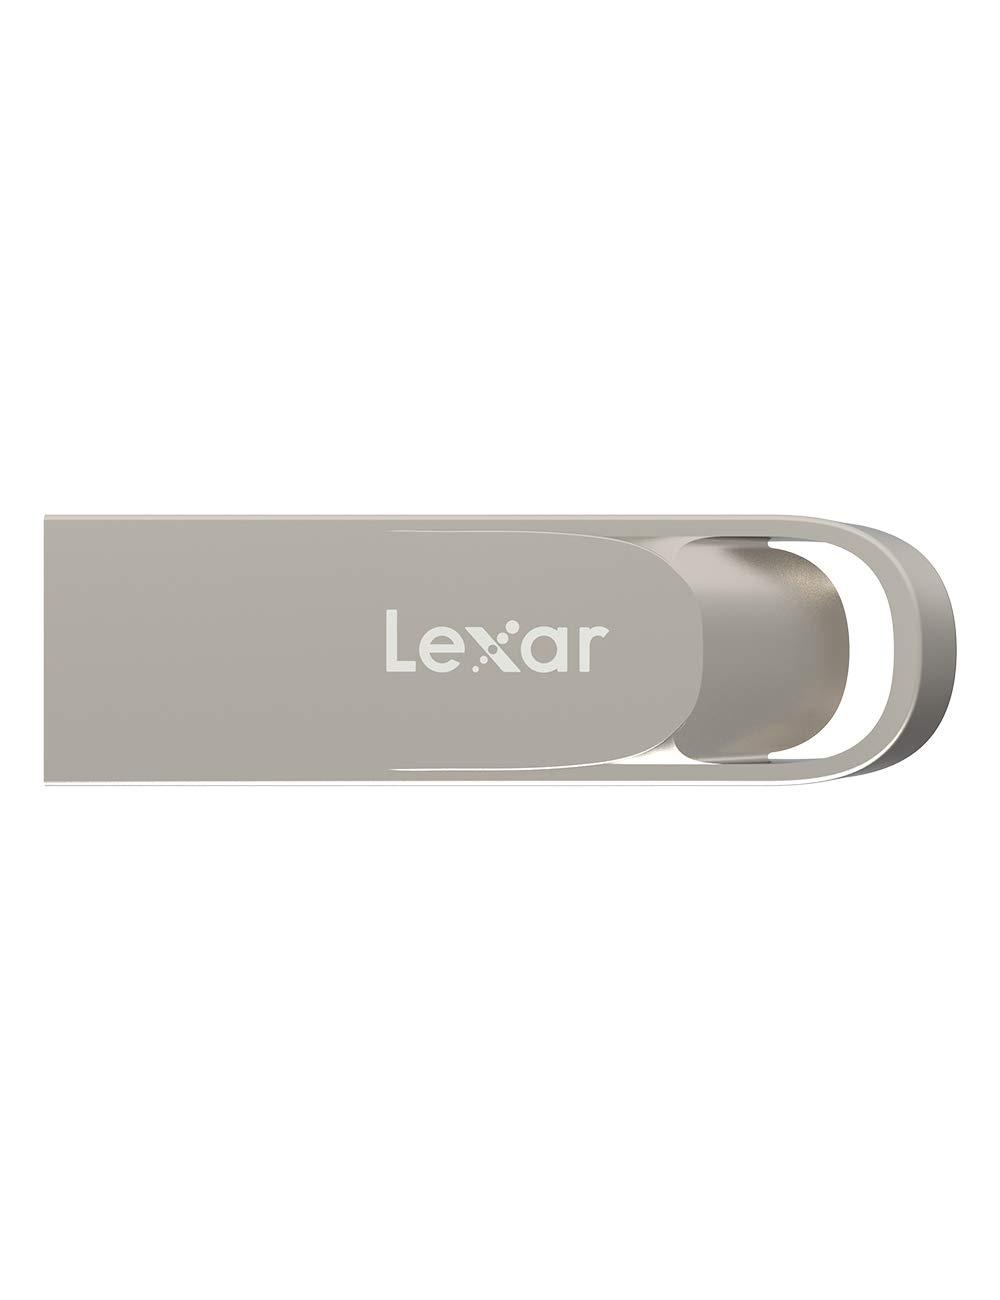 Lexar 128GB USB 3.0 Flash Drive, USB Stick Up to 100MB/s Read Speed, UDP Thumb Drive, Jump Drive Zinc Alloy, Pen Drive, Memory Stick for PS4/PC/Laptop/Computer/External Storage Data/Photo/Video